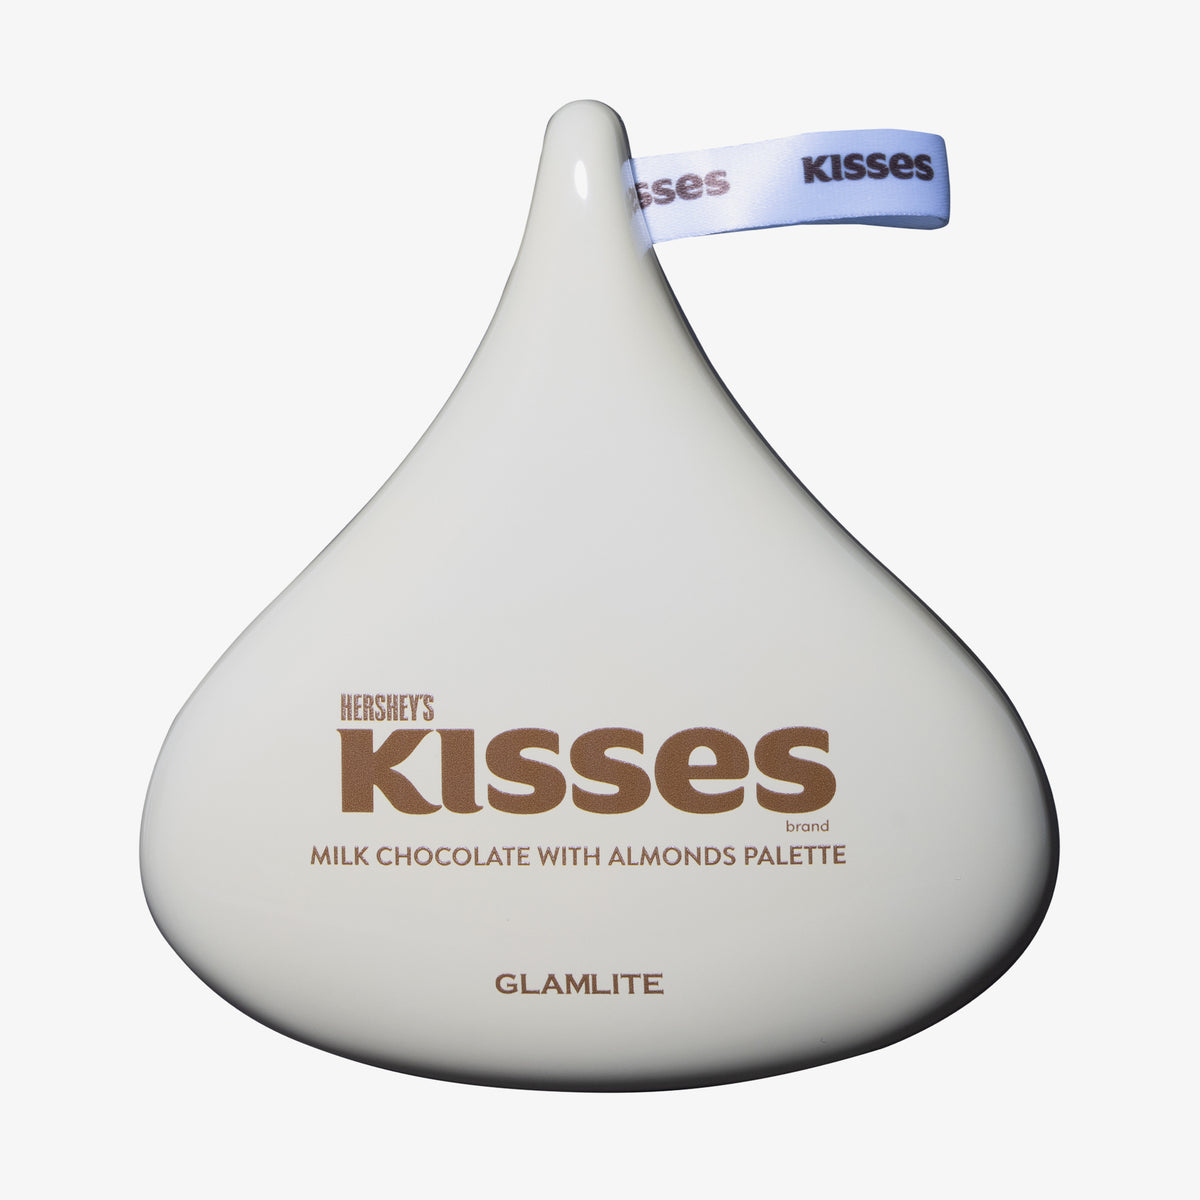 Hershey's Kisses x Glamlite Milk Chocolate with Almonds Palette